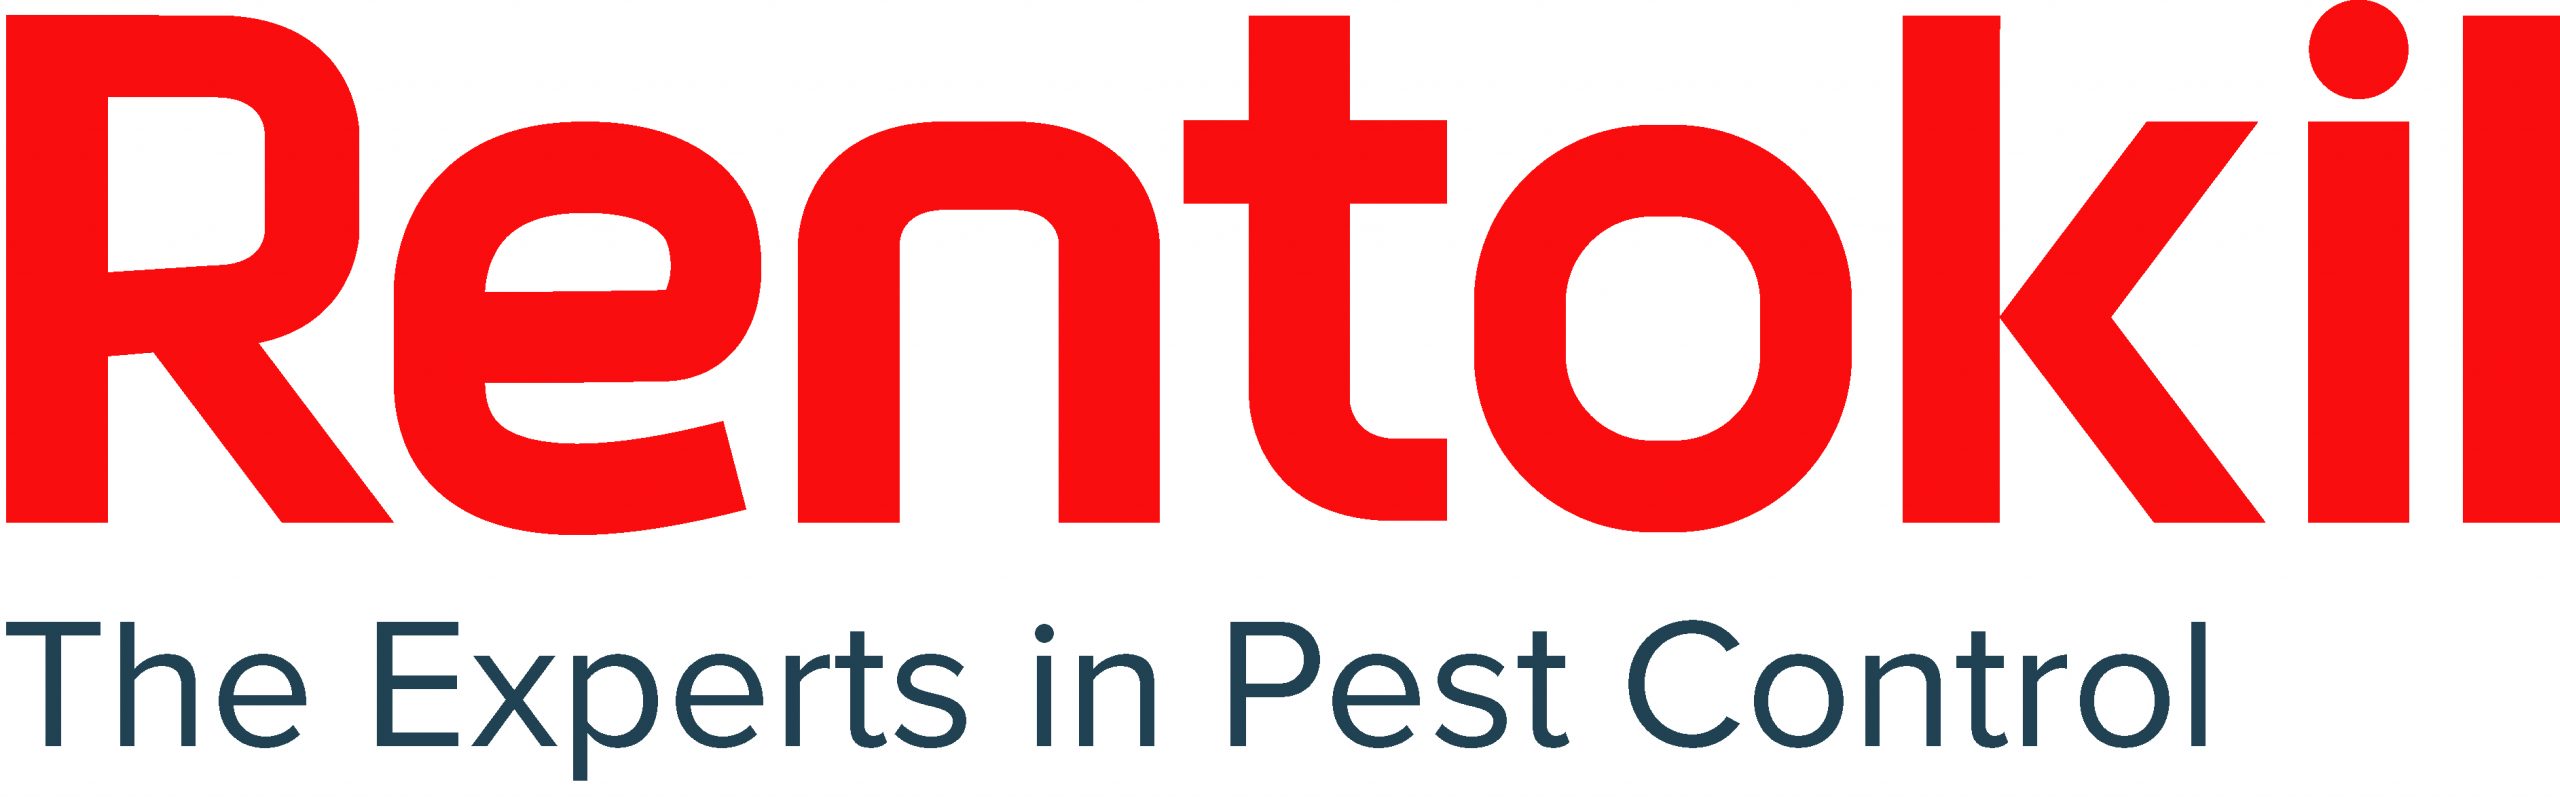 Pest Control Equipment and Materials